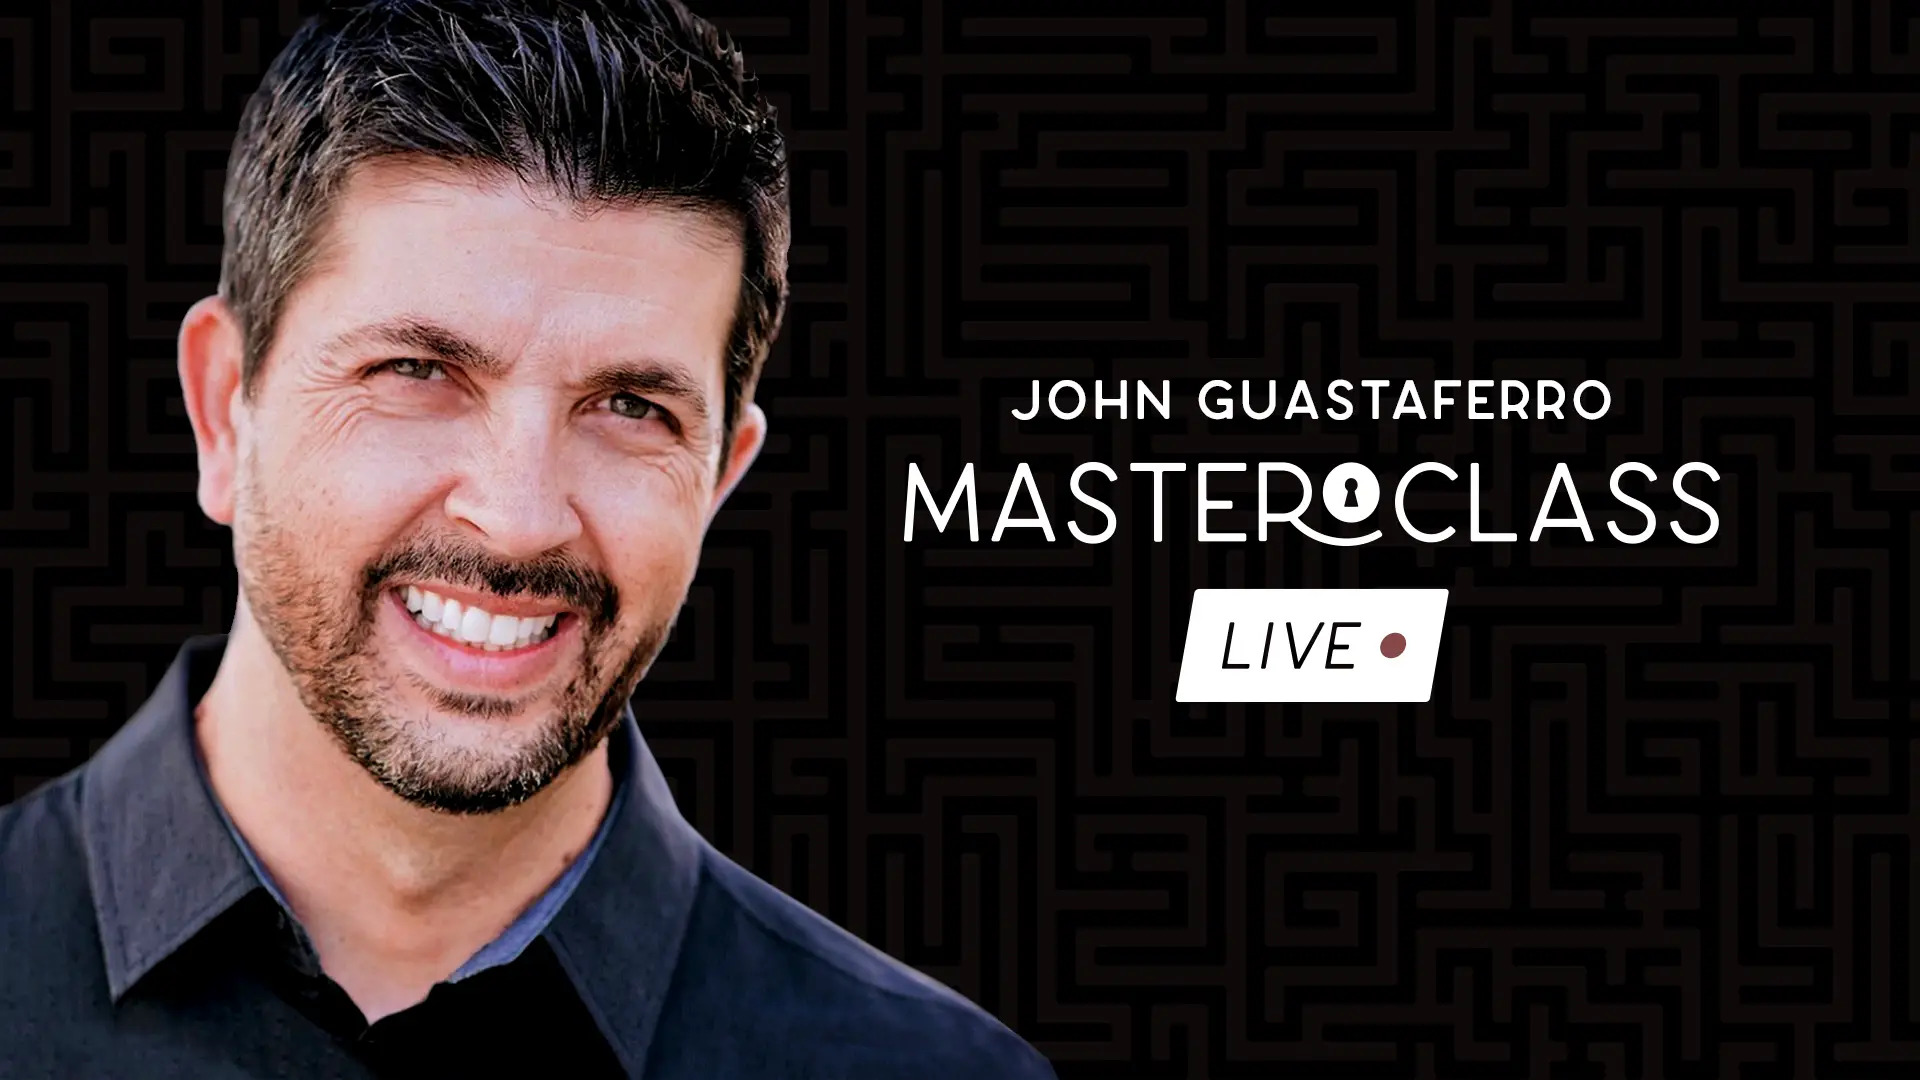 Masterclass Live Lecture by John Guastaferro (Zoom Live) (MP4 Video Download)